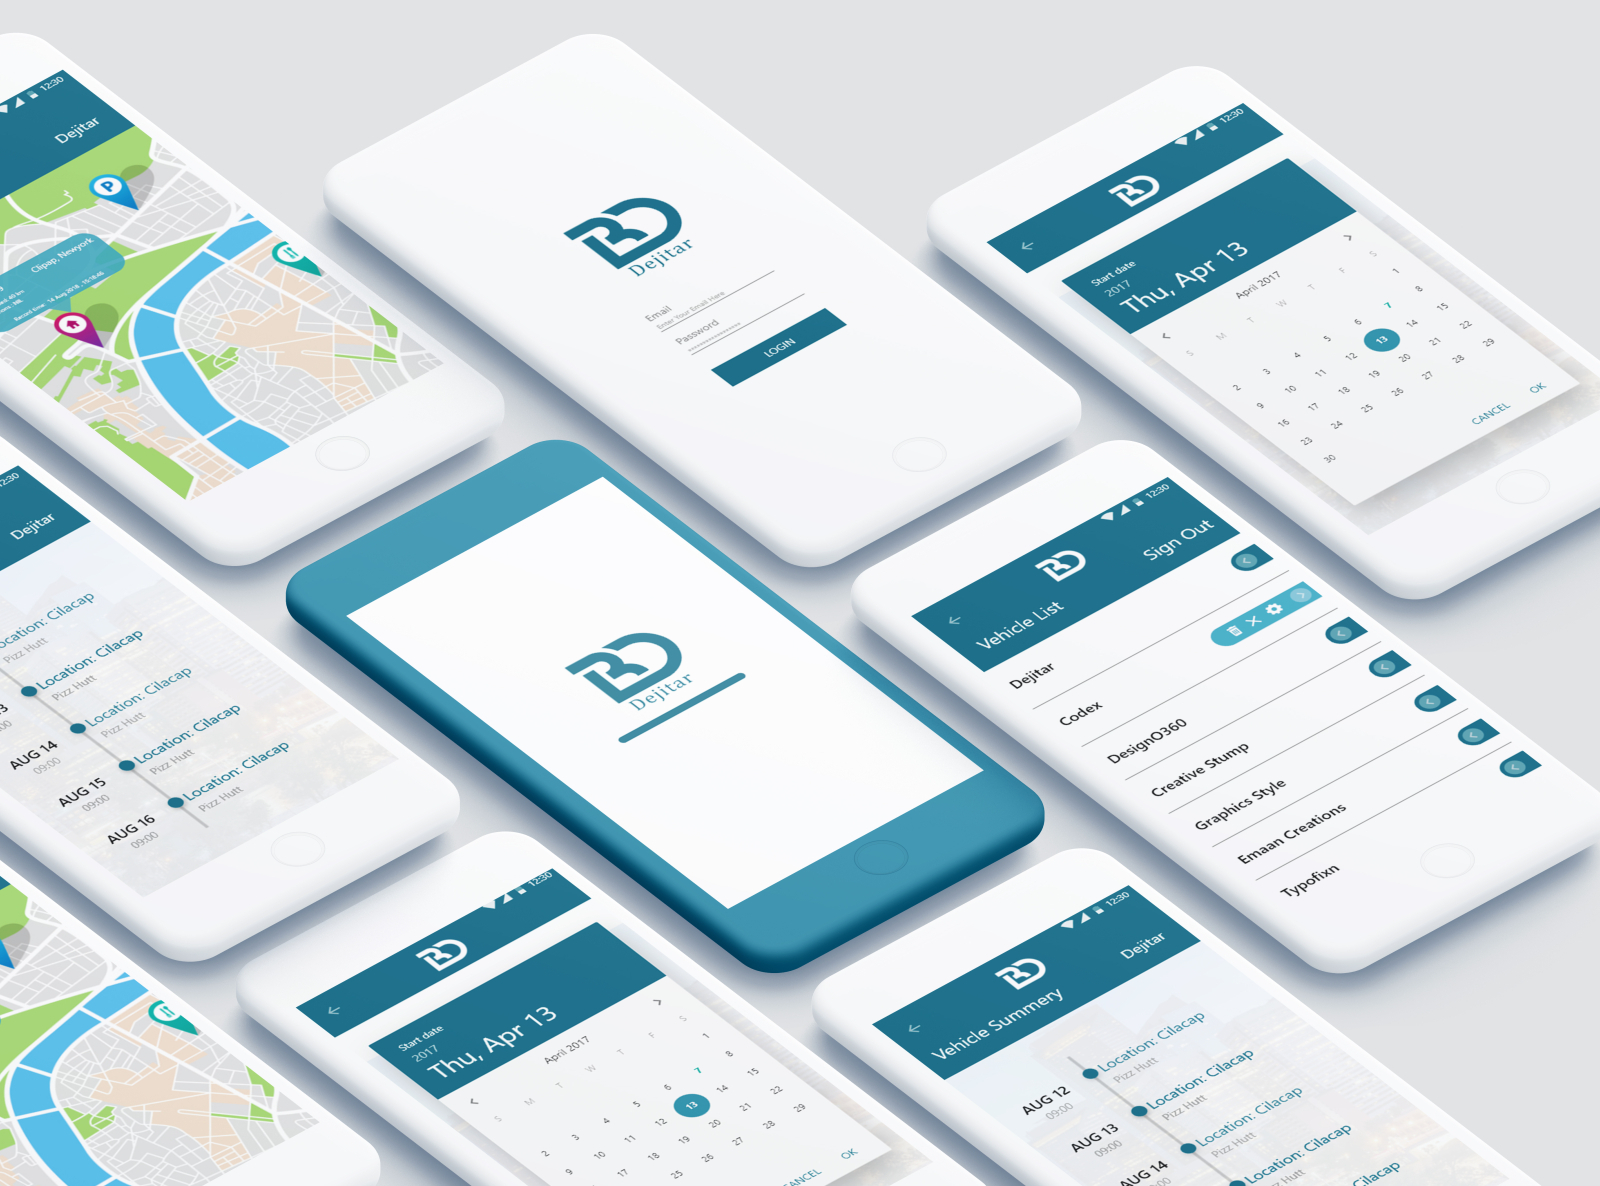 Dejitar | Vehicle Tracking App UI/UX Design by Ghulam Mustafa on Dribbble